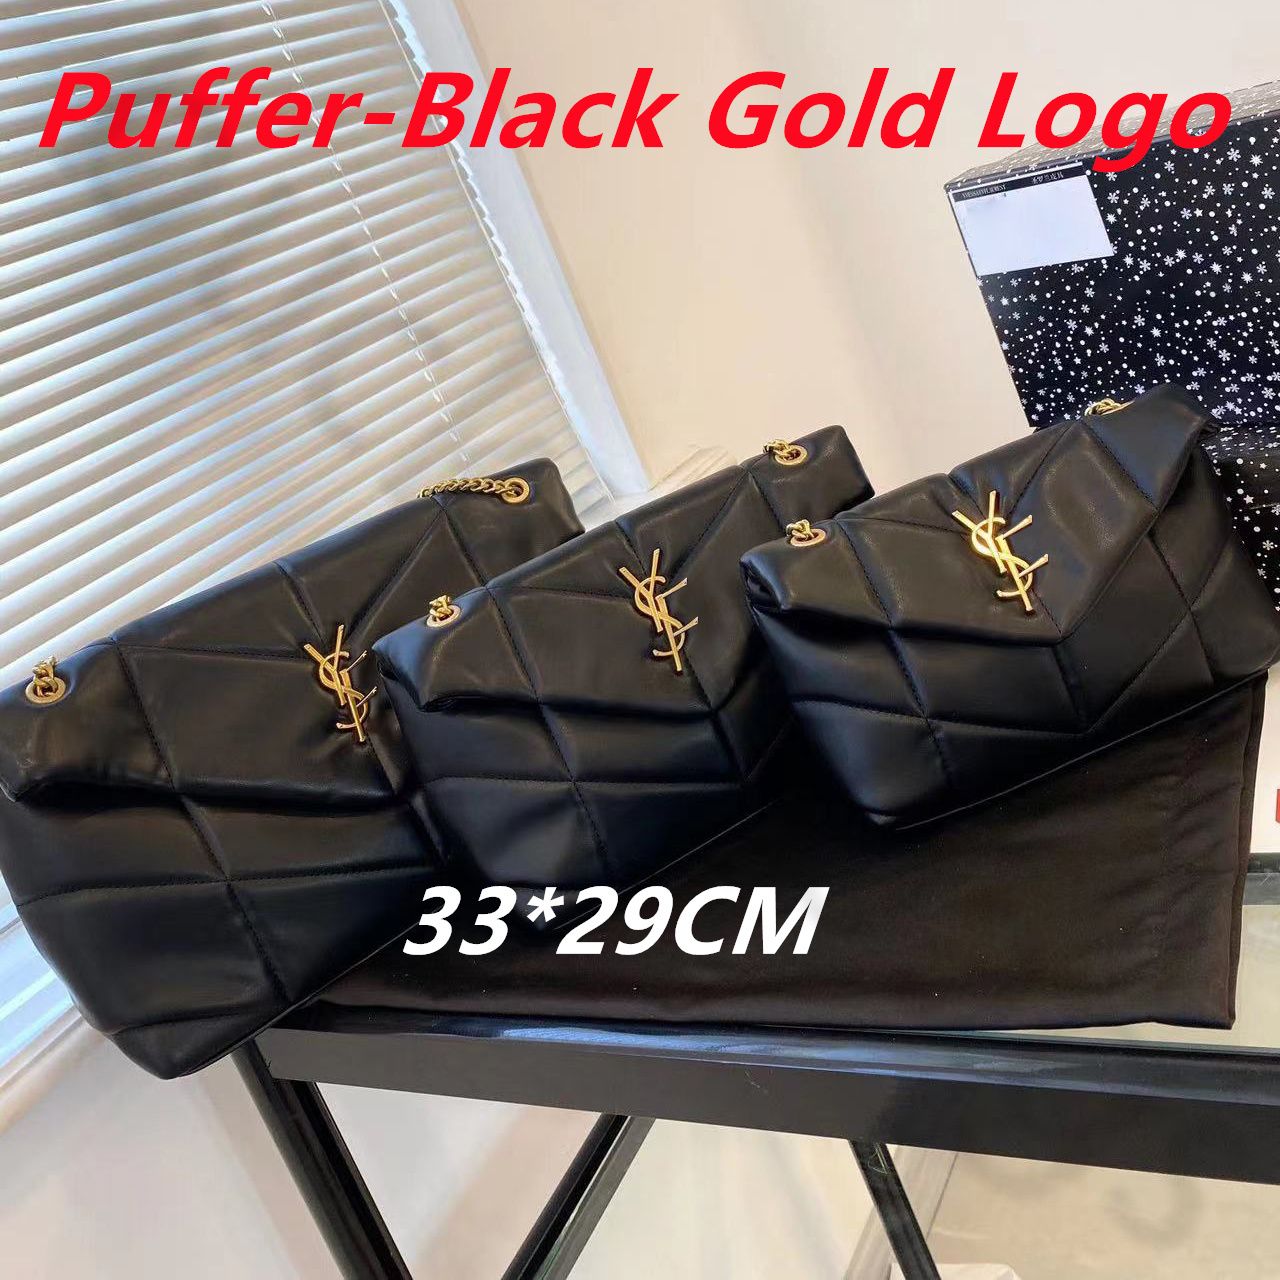 Puffer-Black Gold m